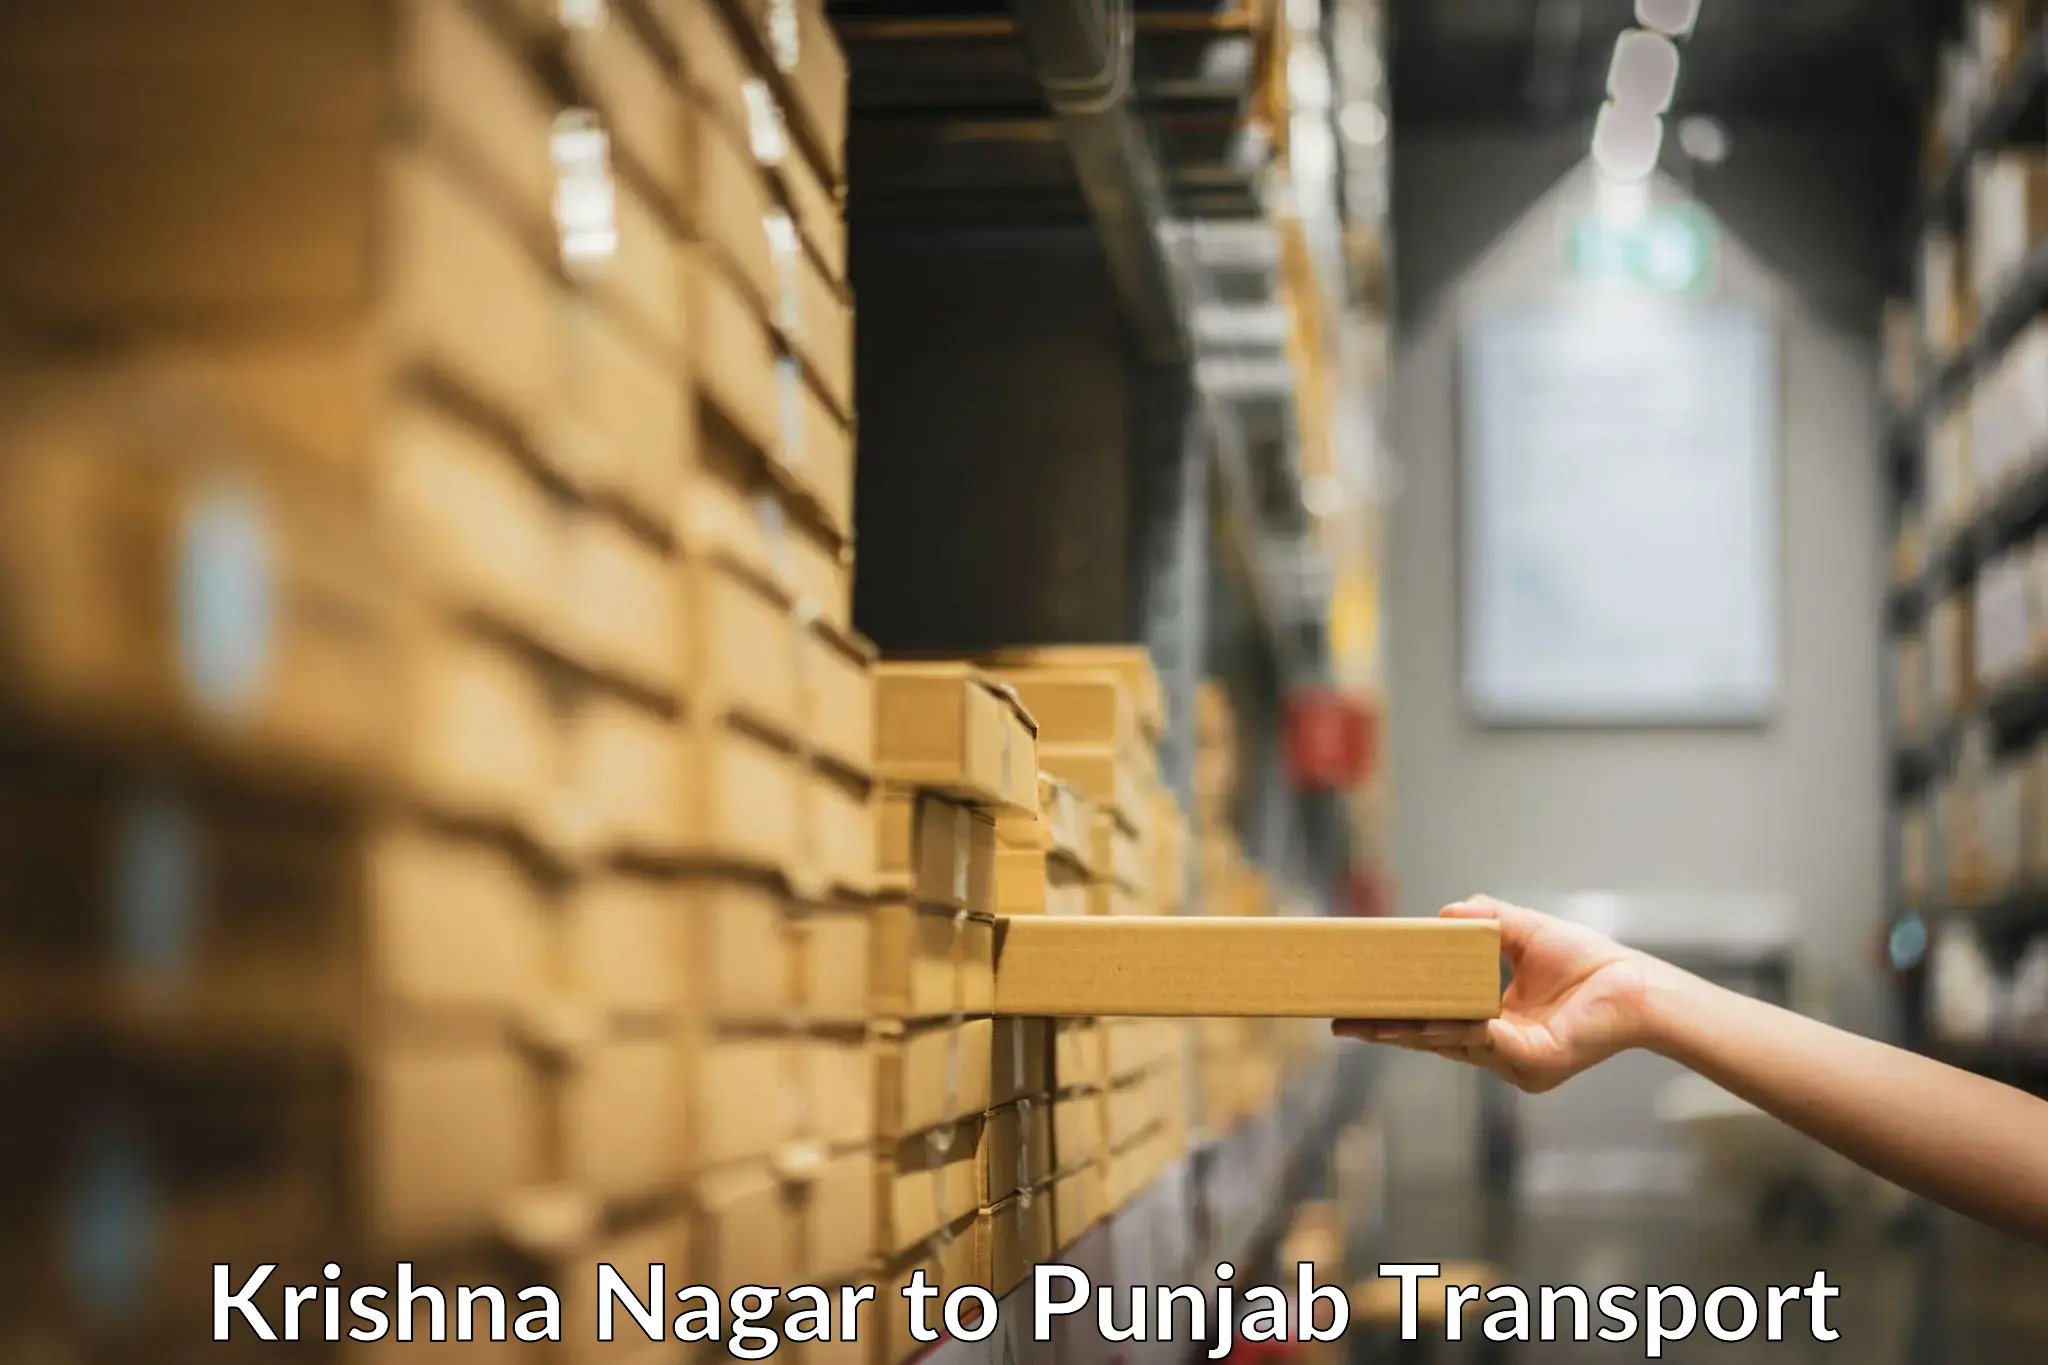 Truck transport companies in India Krishna Nagar to Punjab